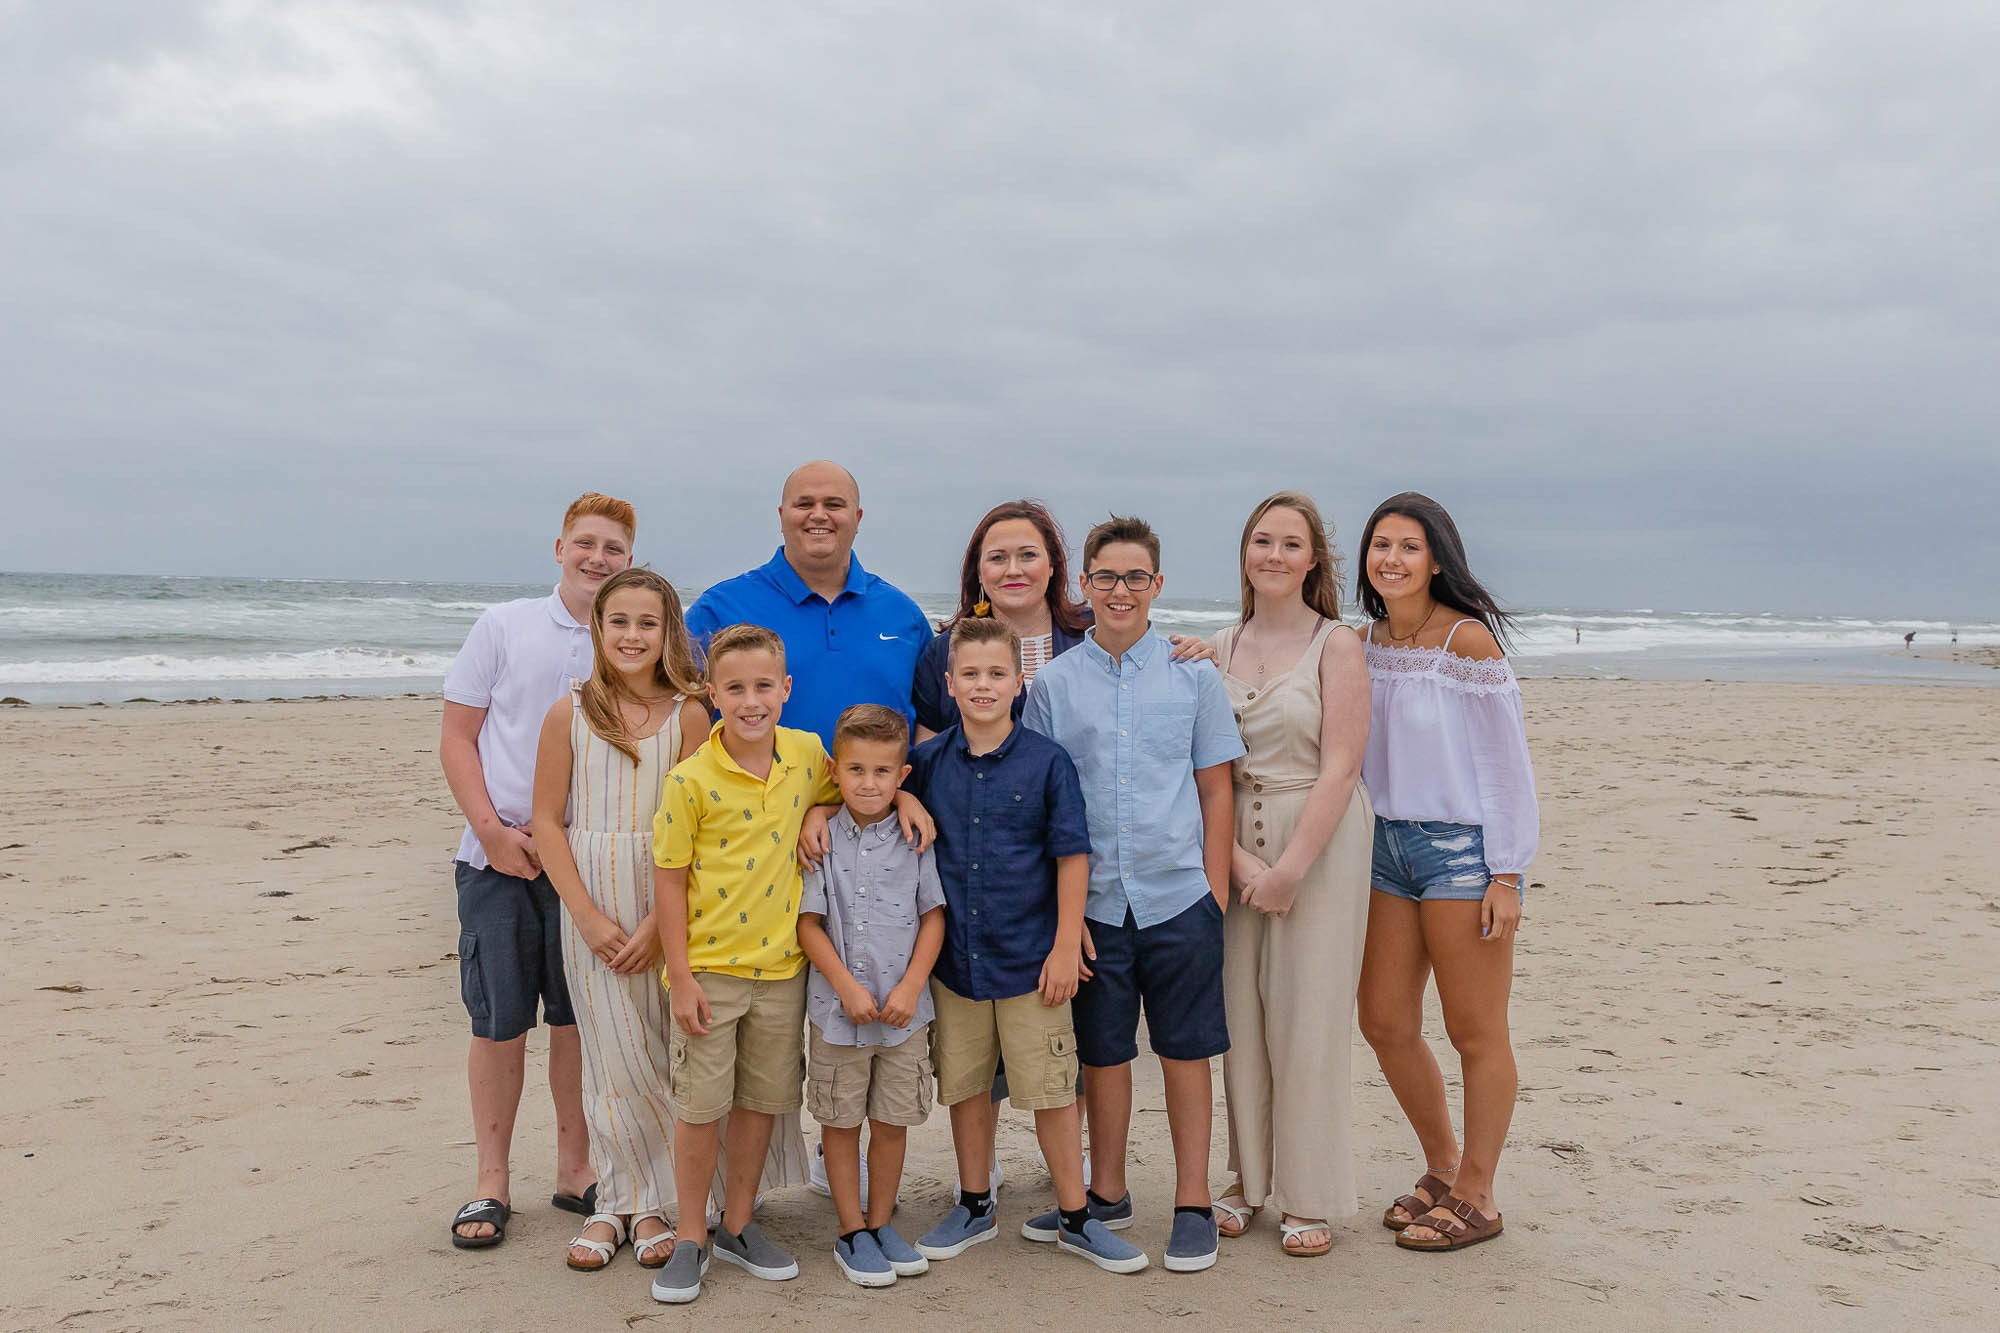 Pregnancy Announcement // Hampton Beach Family Photos 